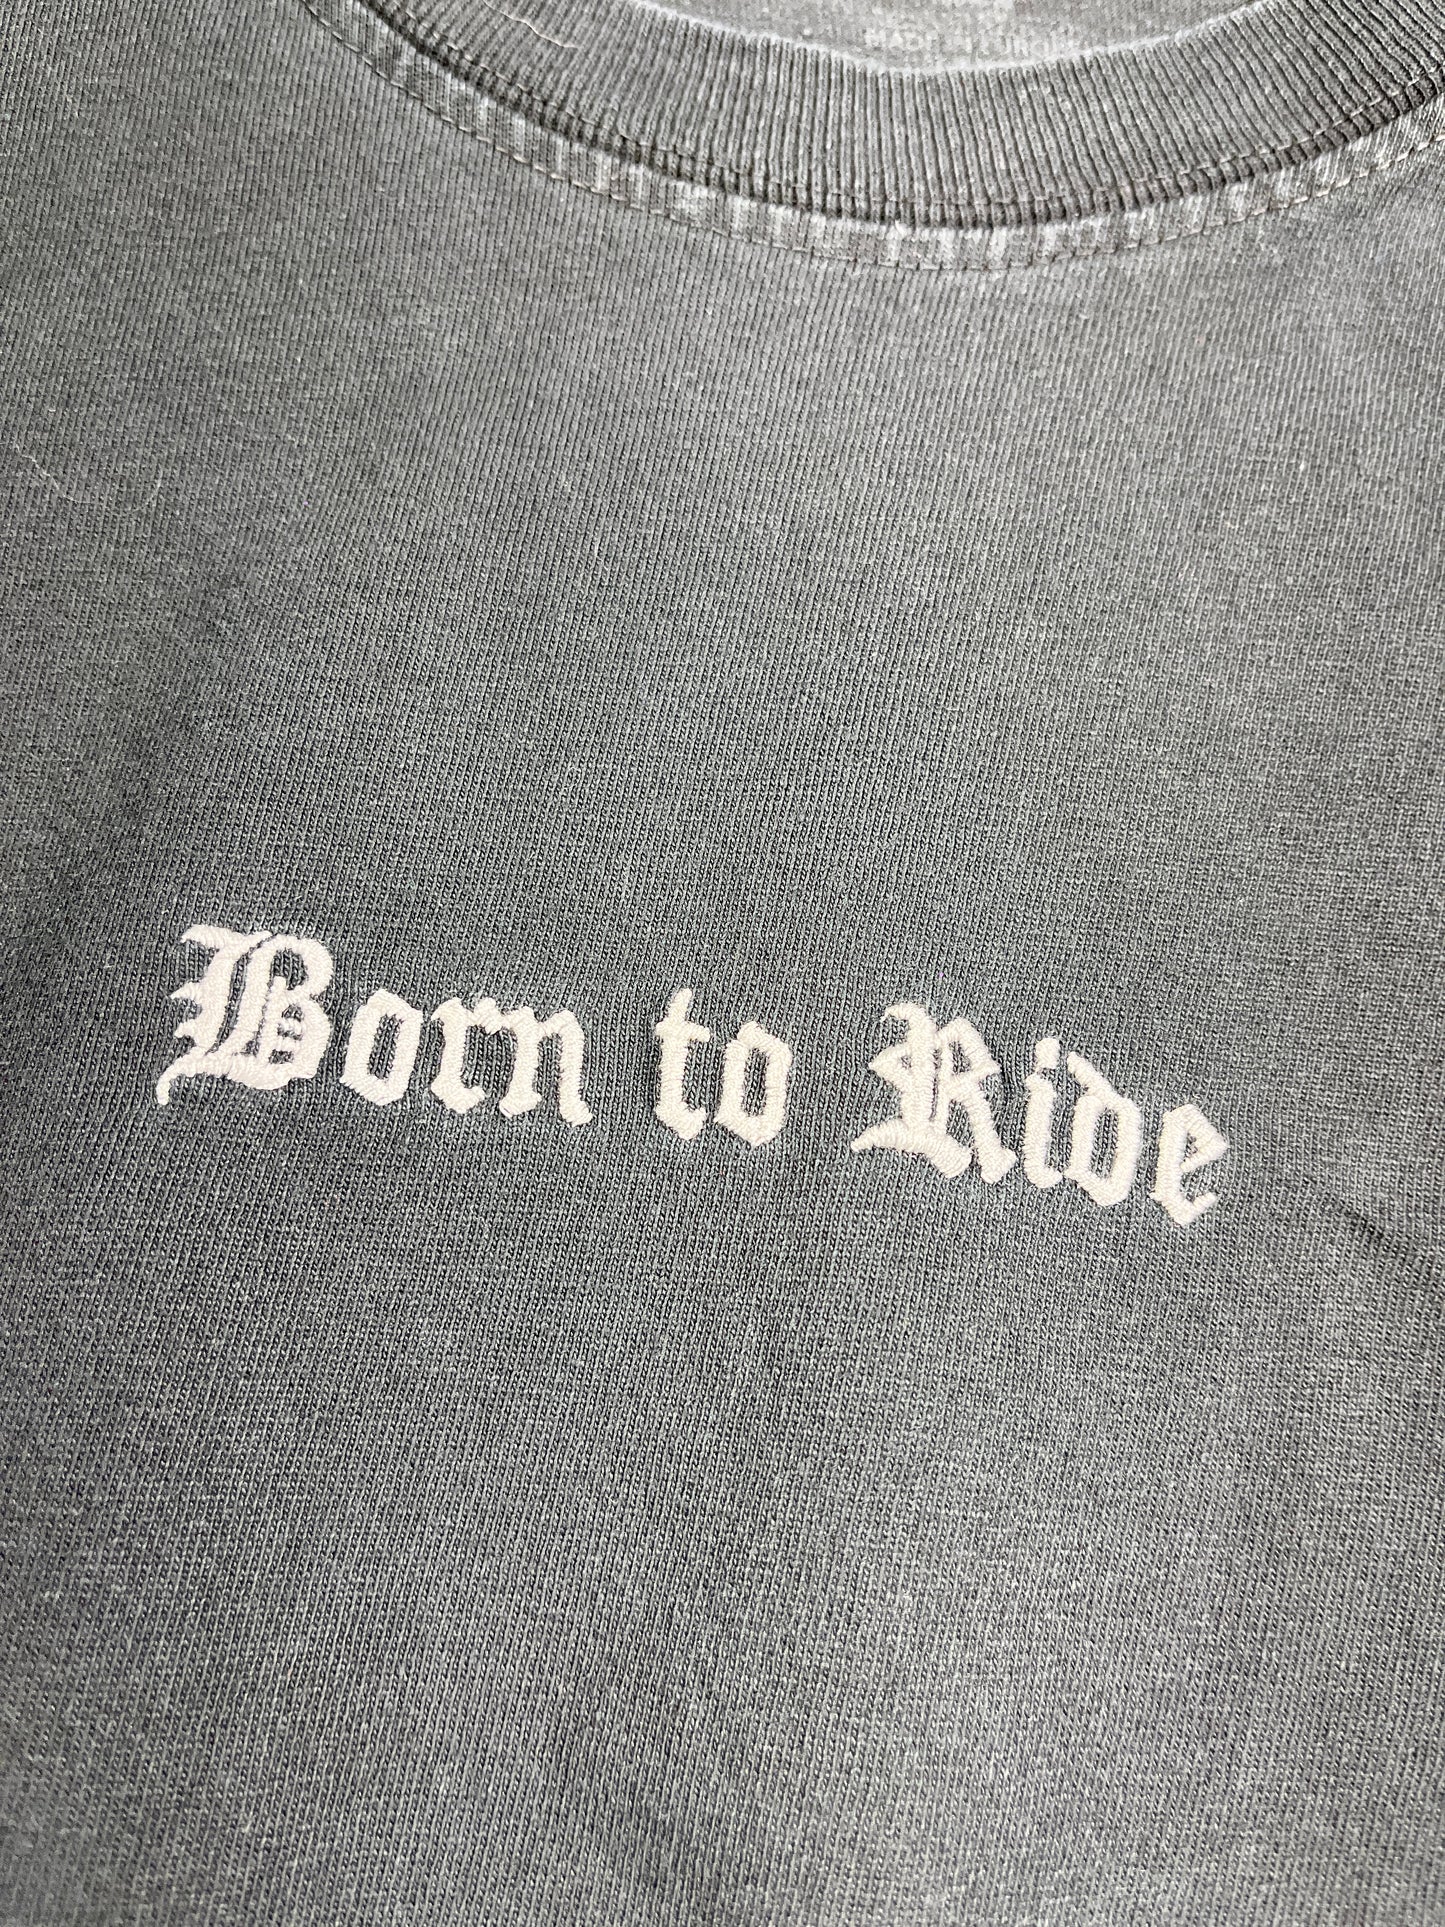 Vintage Born To Ride T-Shirt Top Slogan